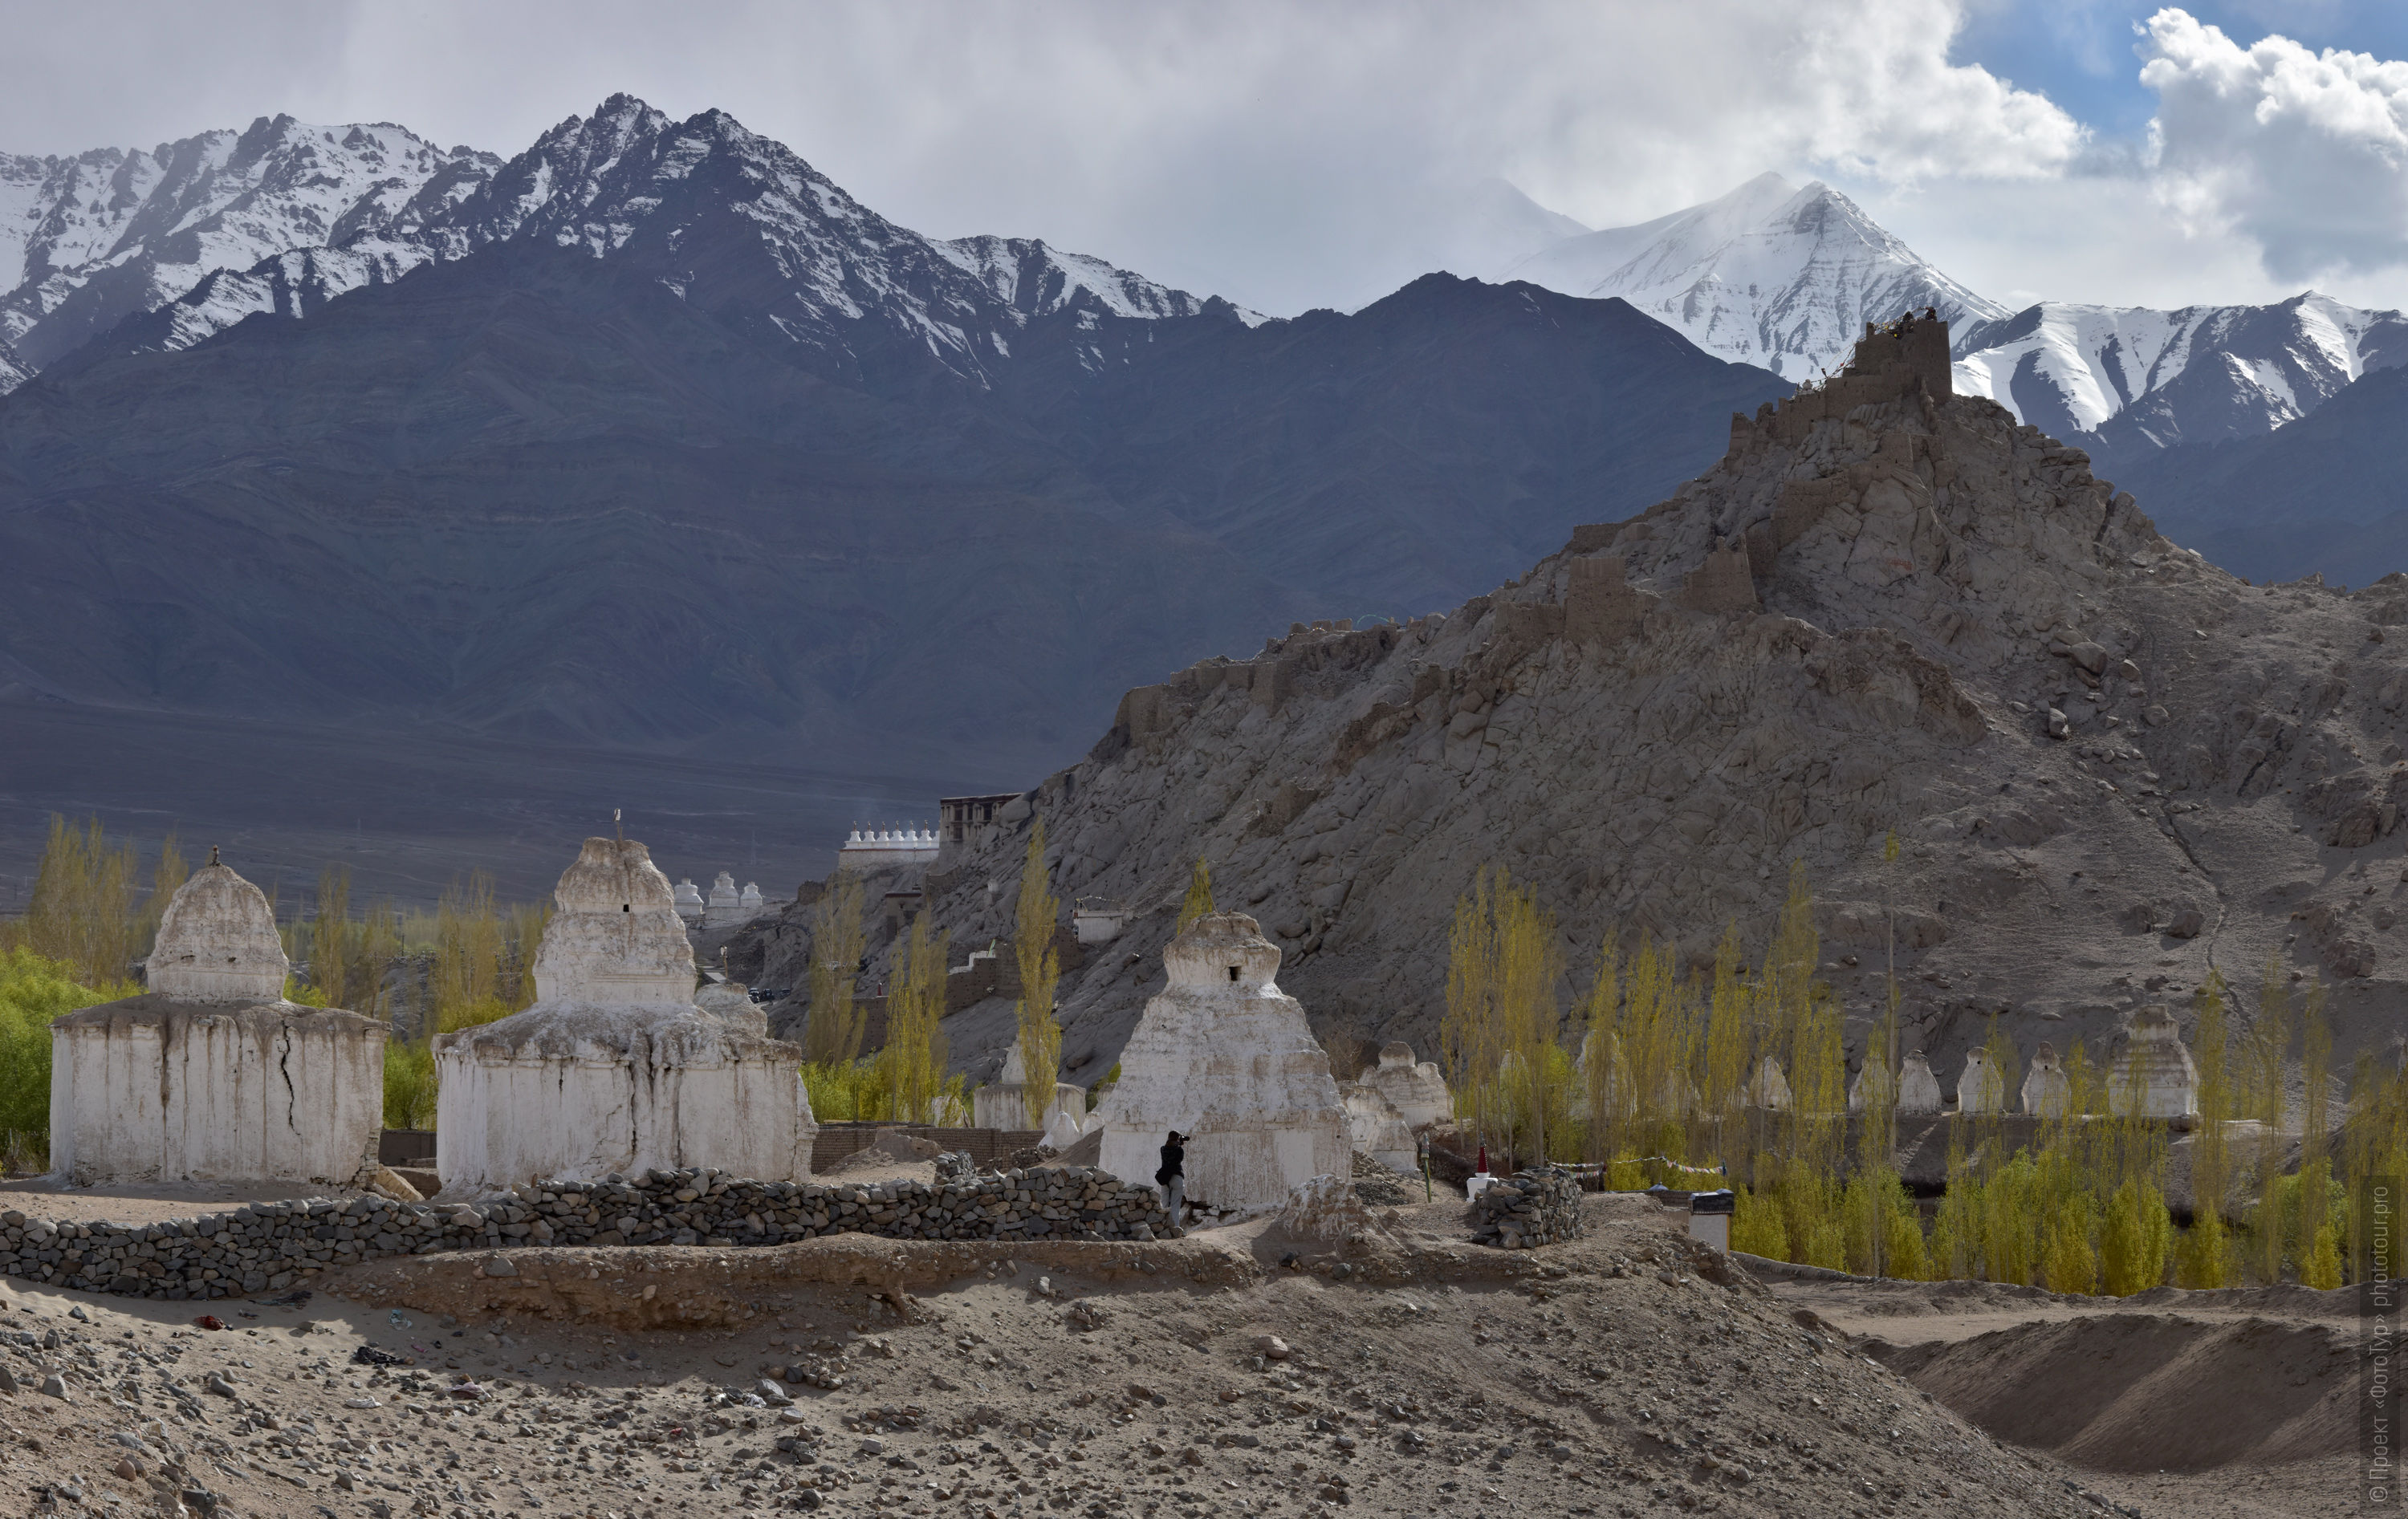 Shay Gonpa Buddhist monastery and white stupas of Naropa, Ladakh womens tour, August 31 - September 14, 2019.